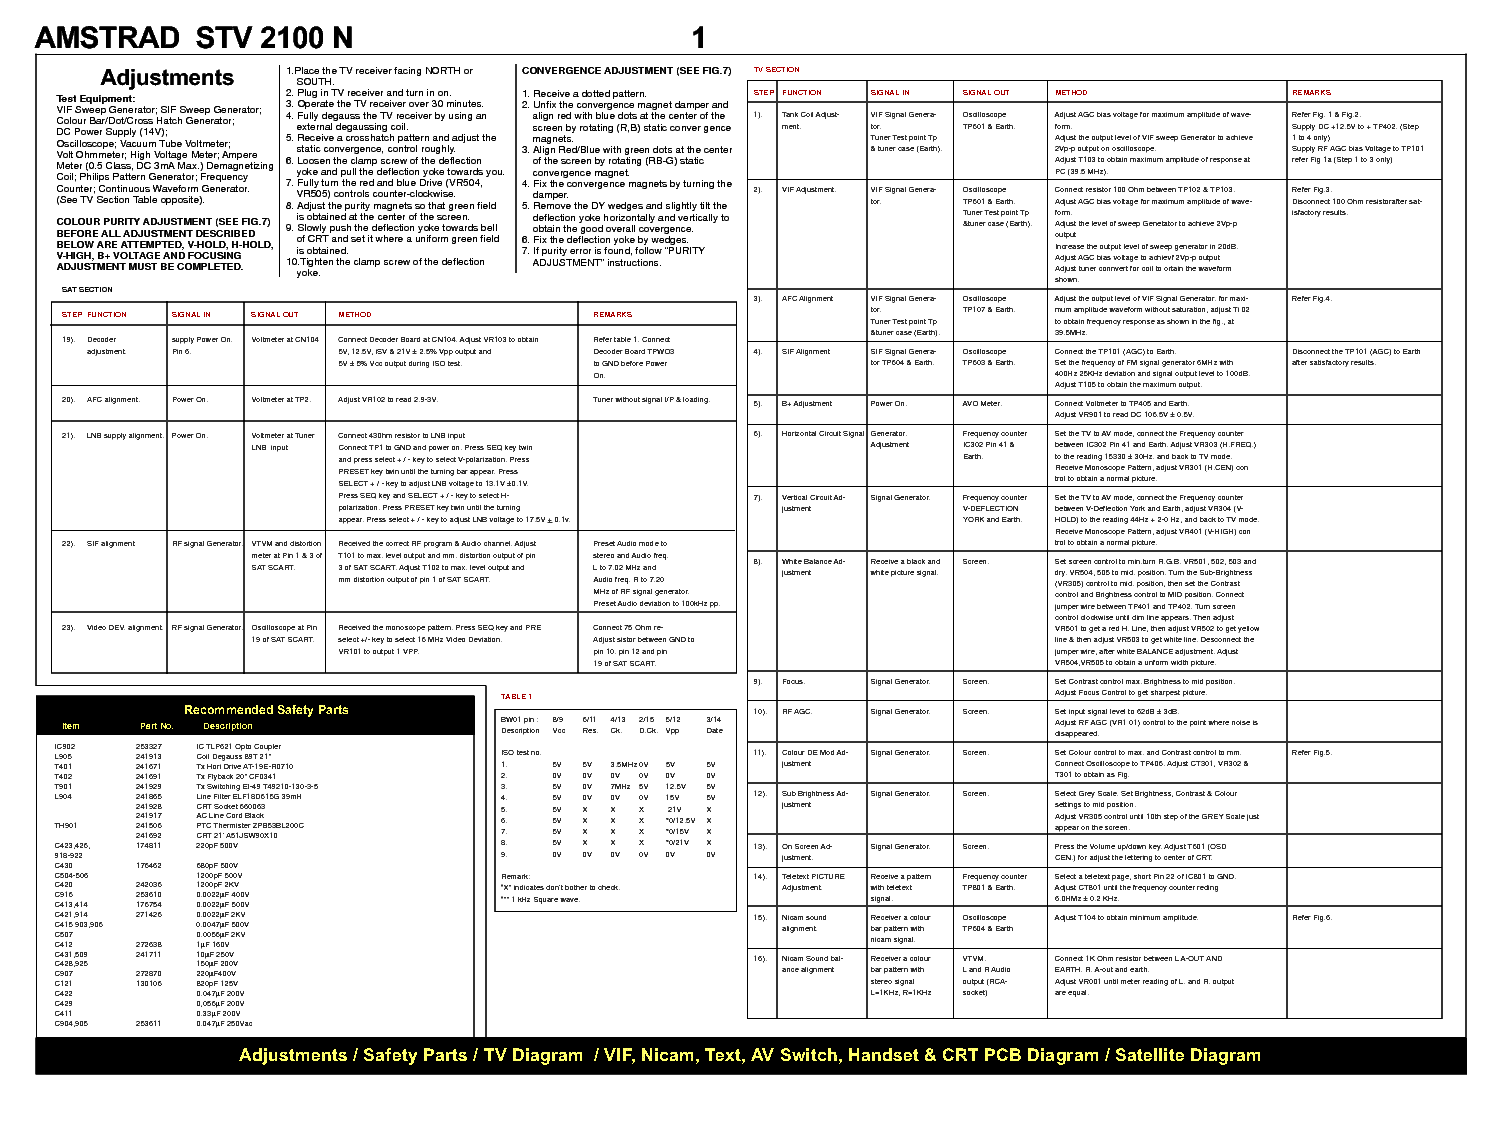 AMSTRAD TV STV-2100N service manual (1st page)